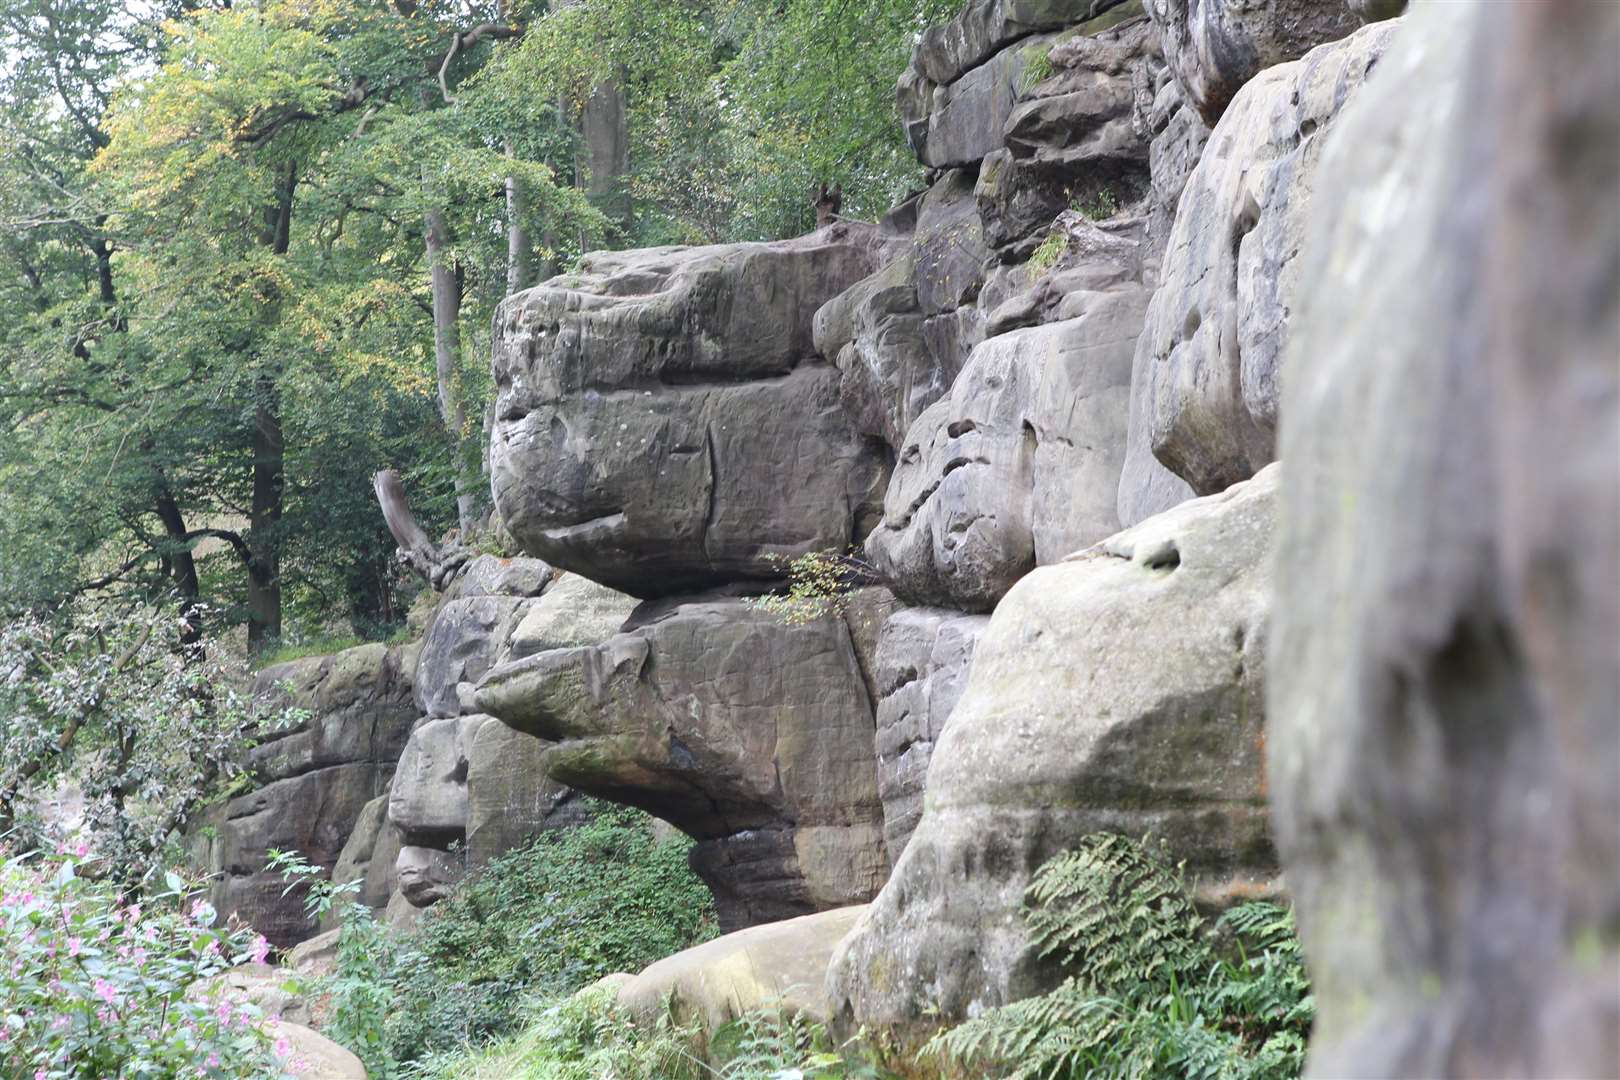 Harrison's Rock at Groombridge is one of Kent's favorite climbers Photo: John Westhrop